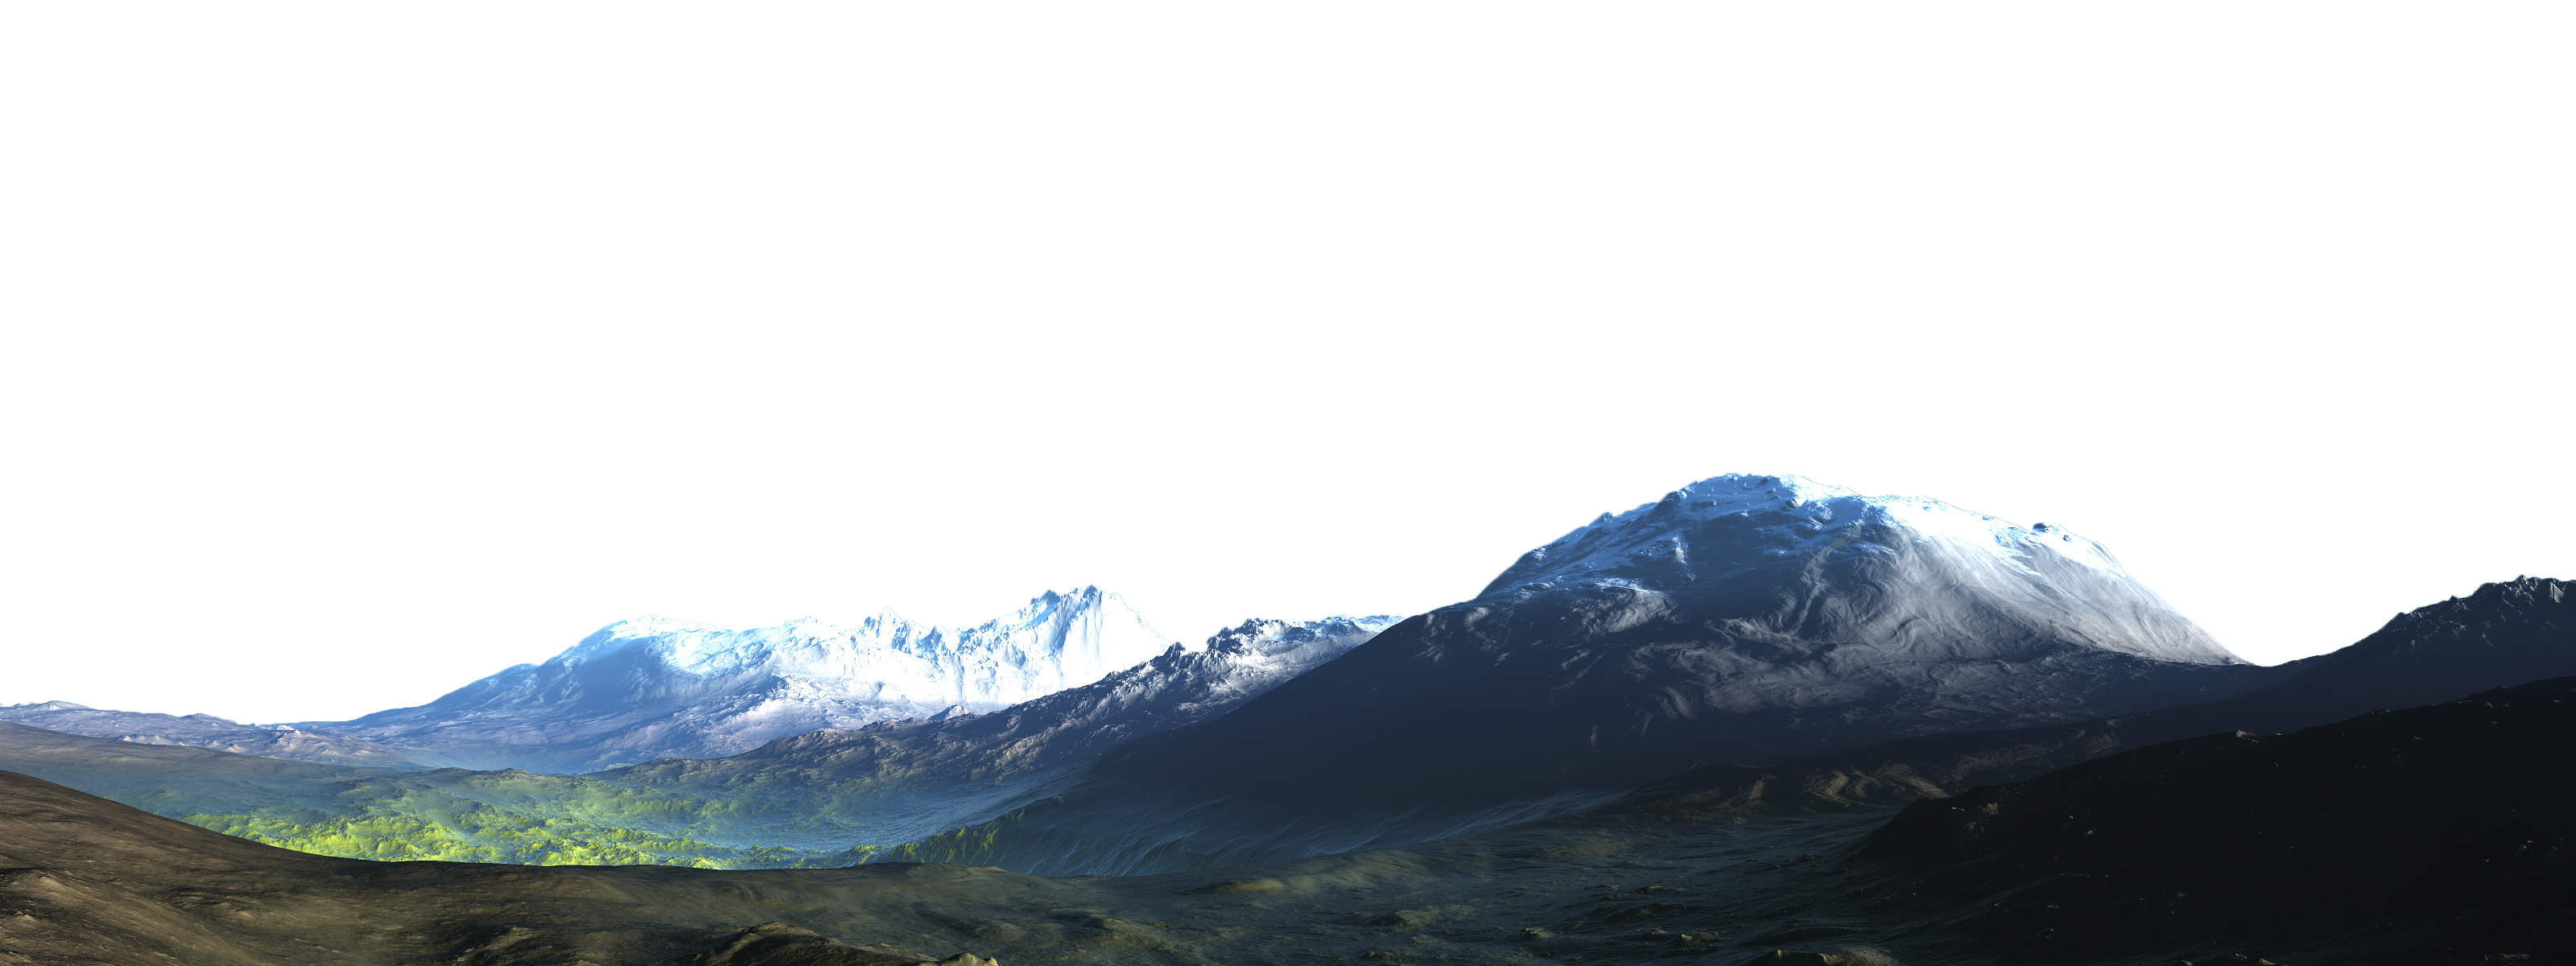 Mountain Range PNG HD - 151151